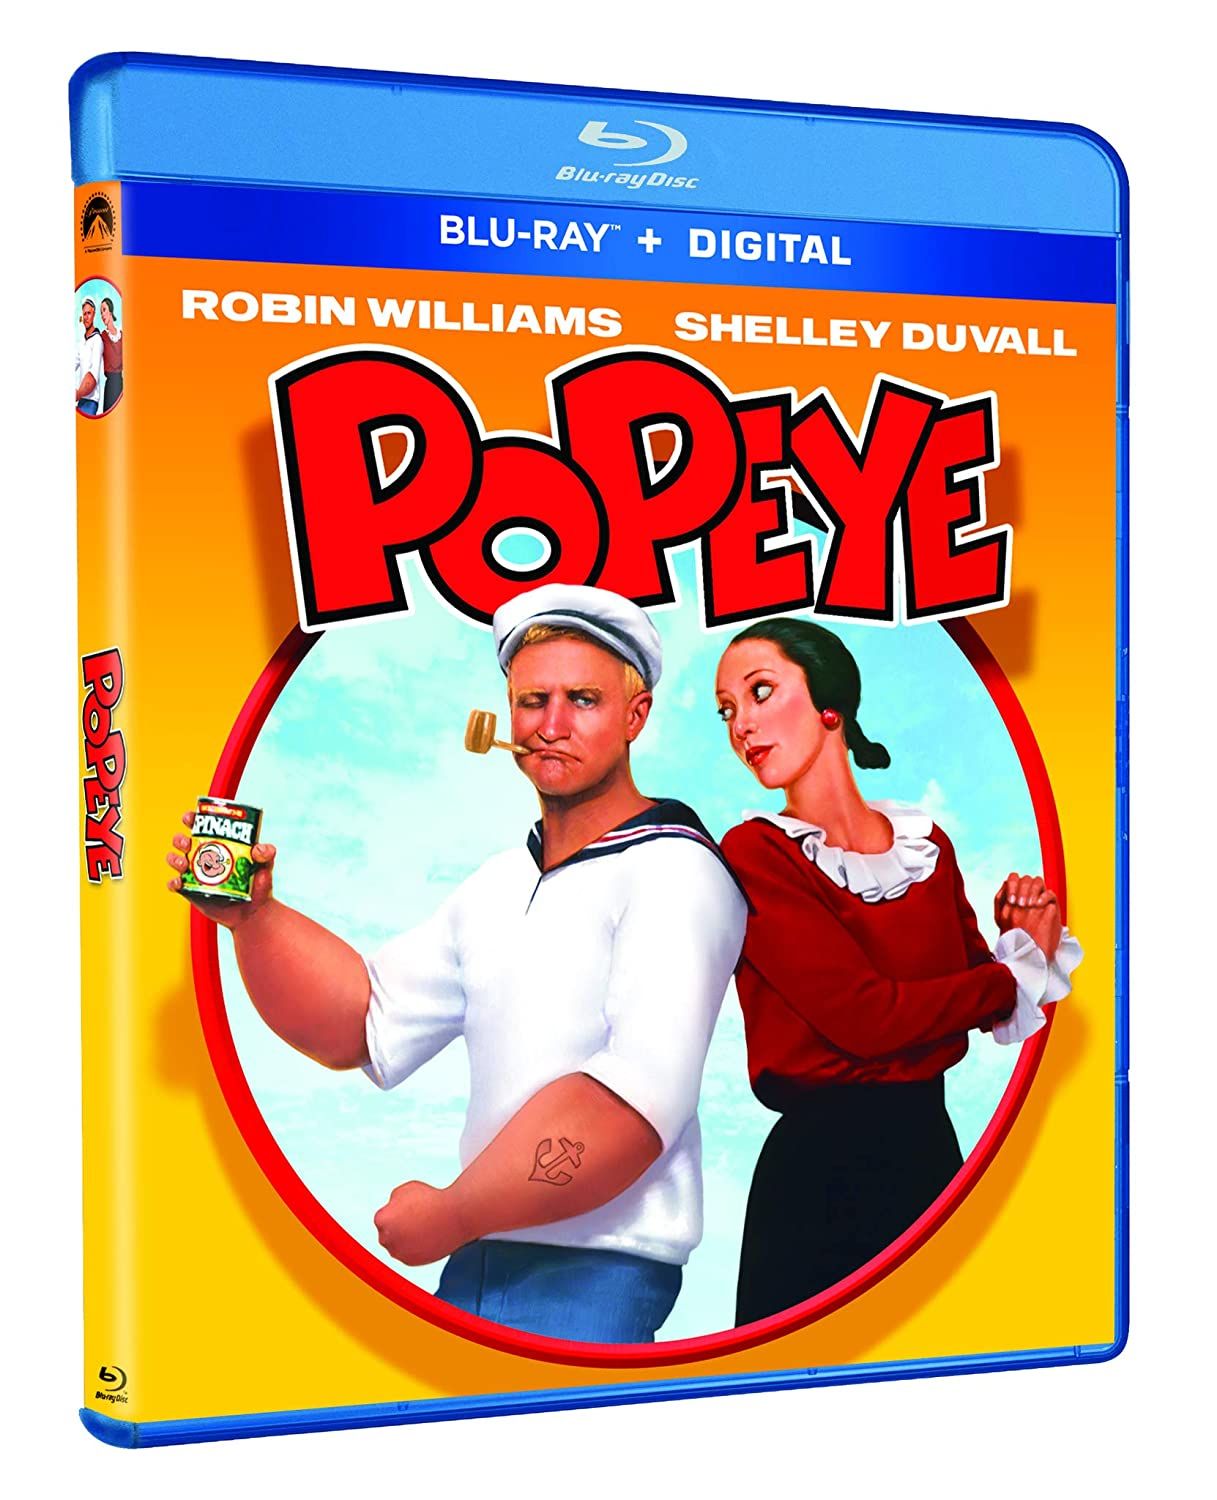 Popeye on Blu-ray 2020